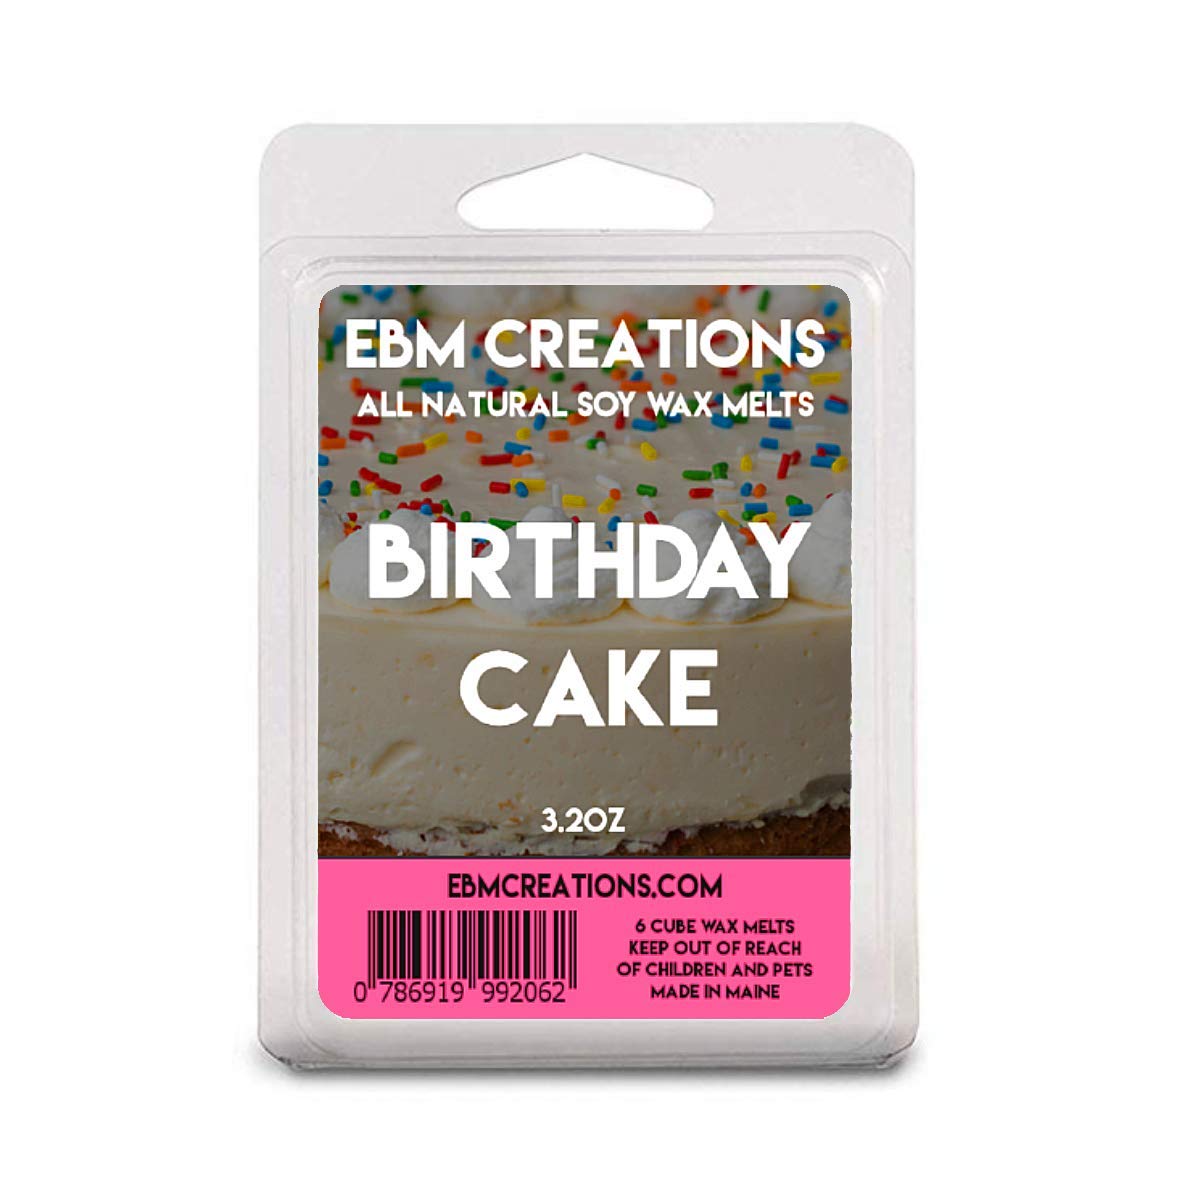 Birthday Cake - 3.2 oz Clamshell